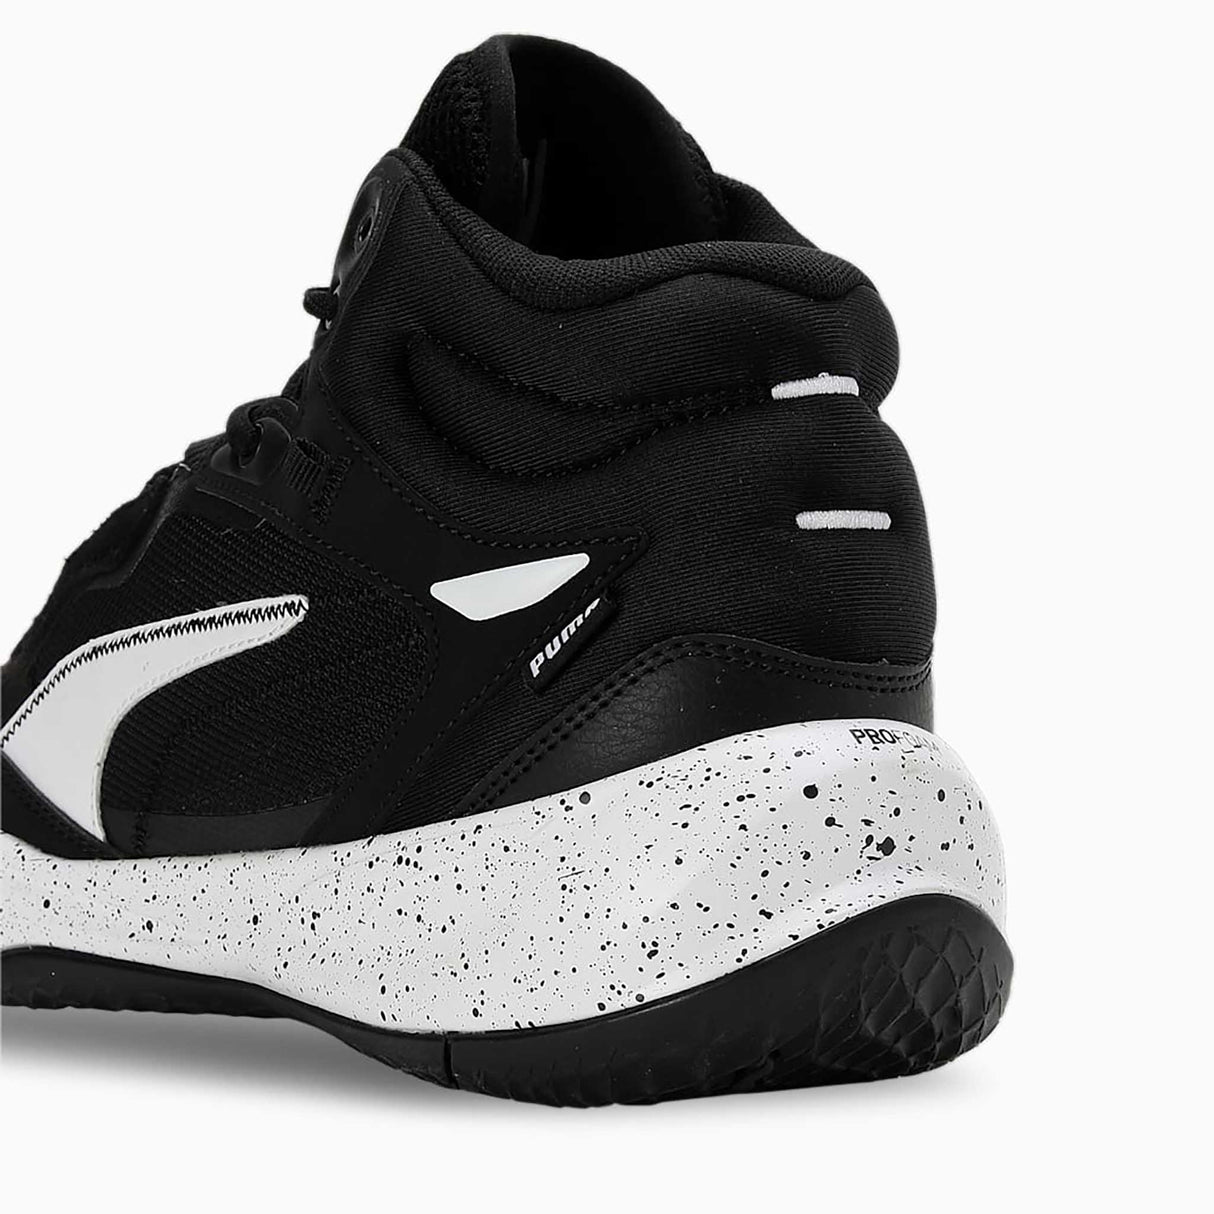 Puma Playmaker Pro Mid Splatter souliers de basketball - noir / blanc talon